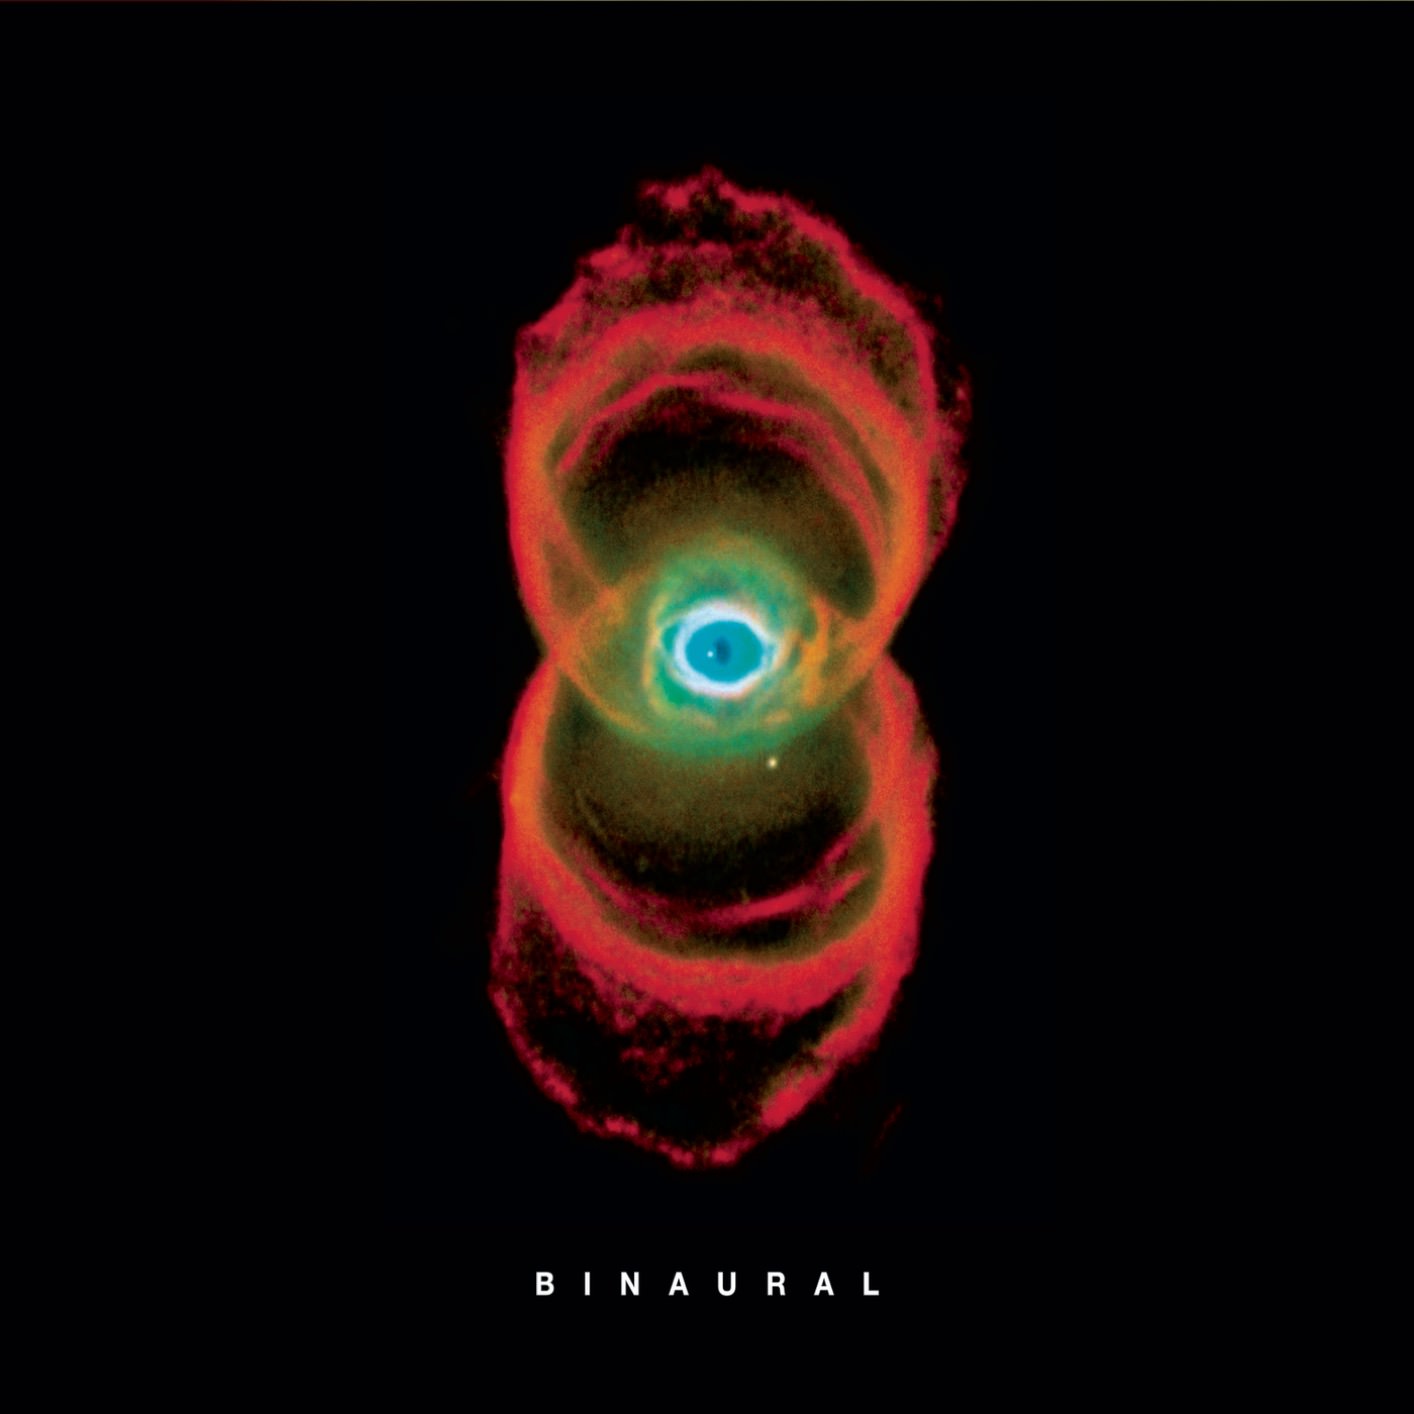 Pearl Jam - Binaural (2000/2013) [HDTracks FLAC 24bit/192kHz]